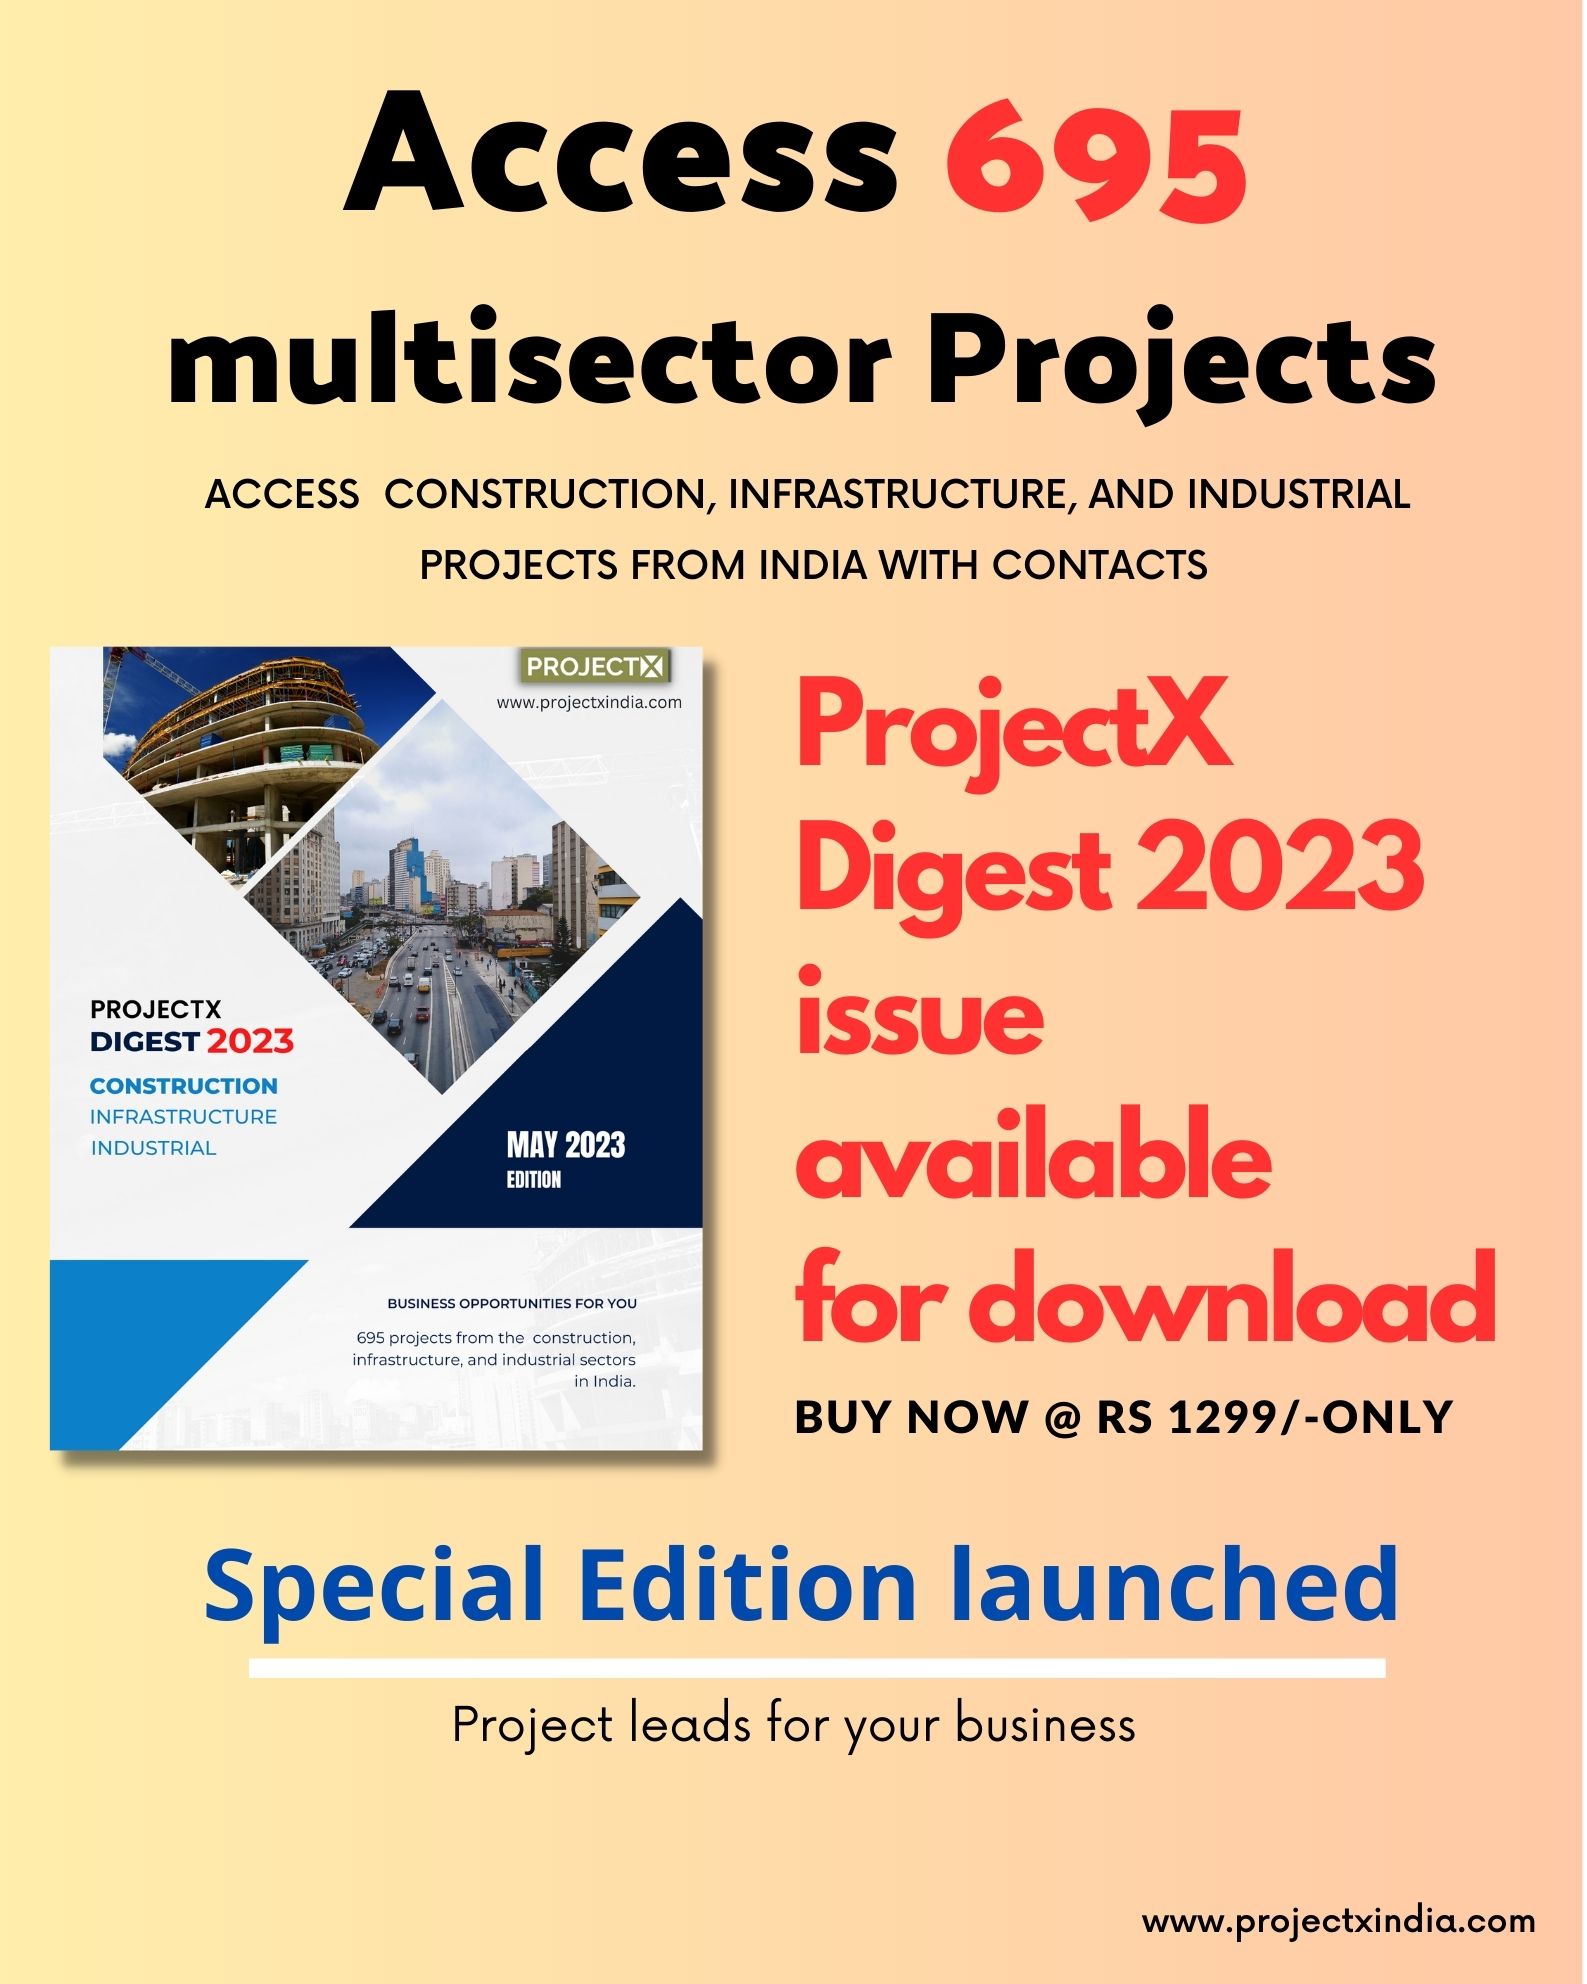 ProjectX Digest 2023